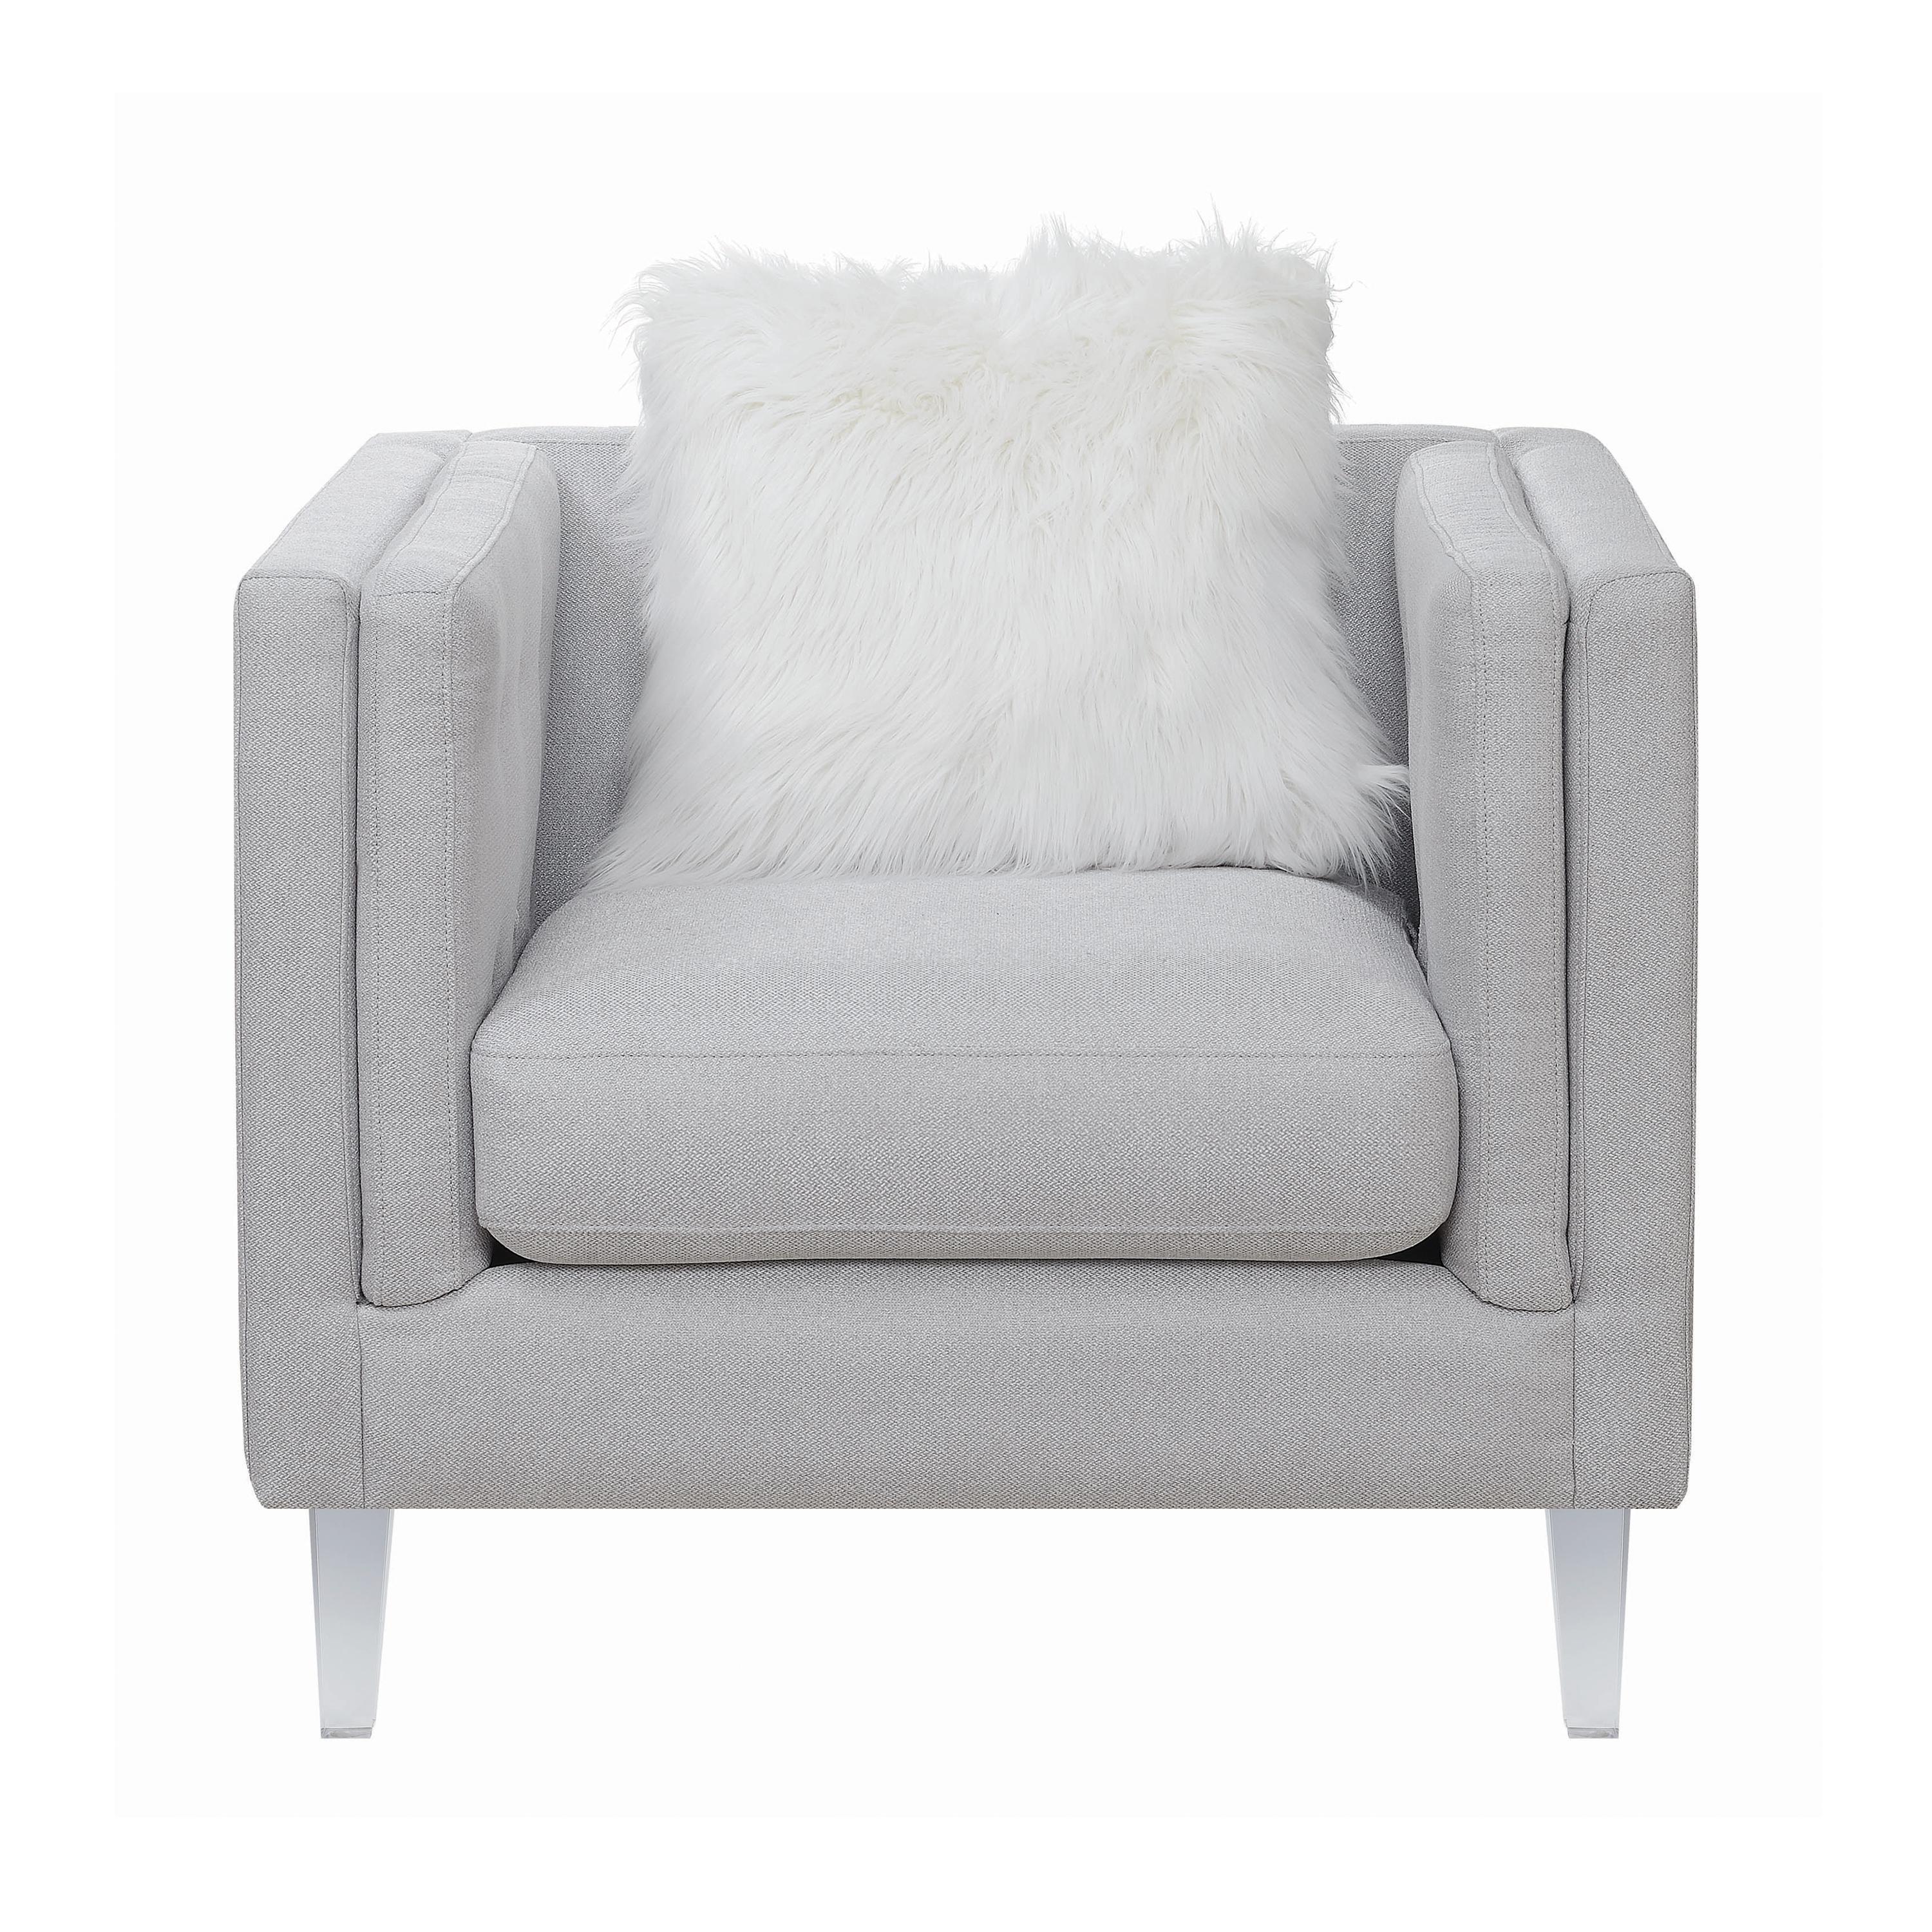 Modern Arm Chair 508883 Glacier 508883 in Light Gray 